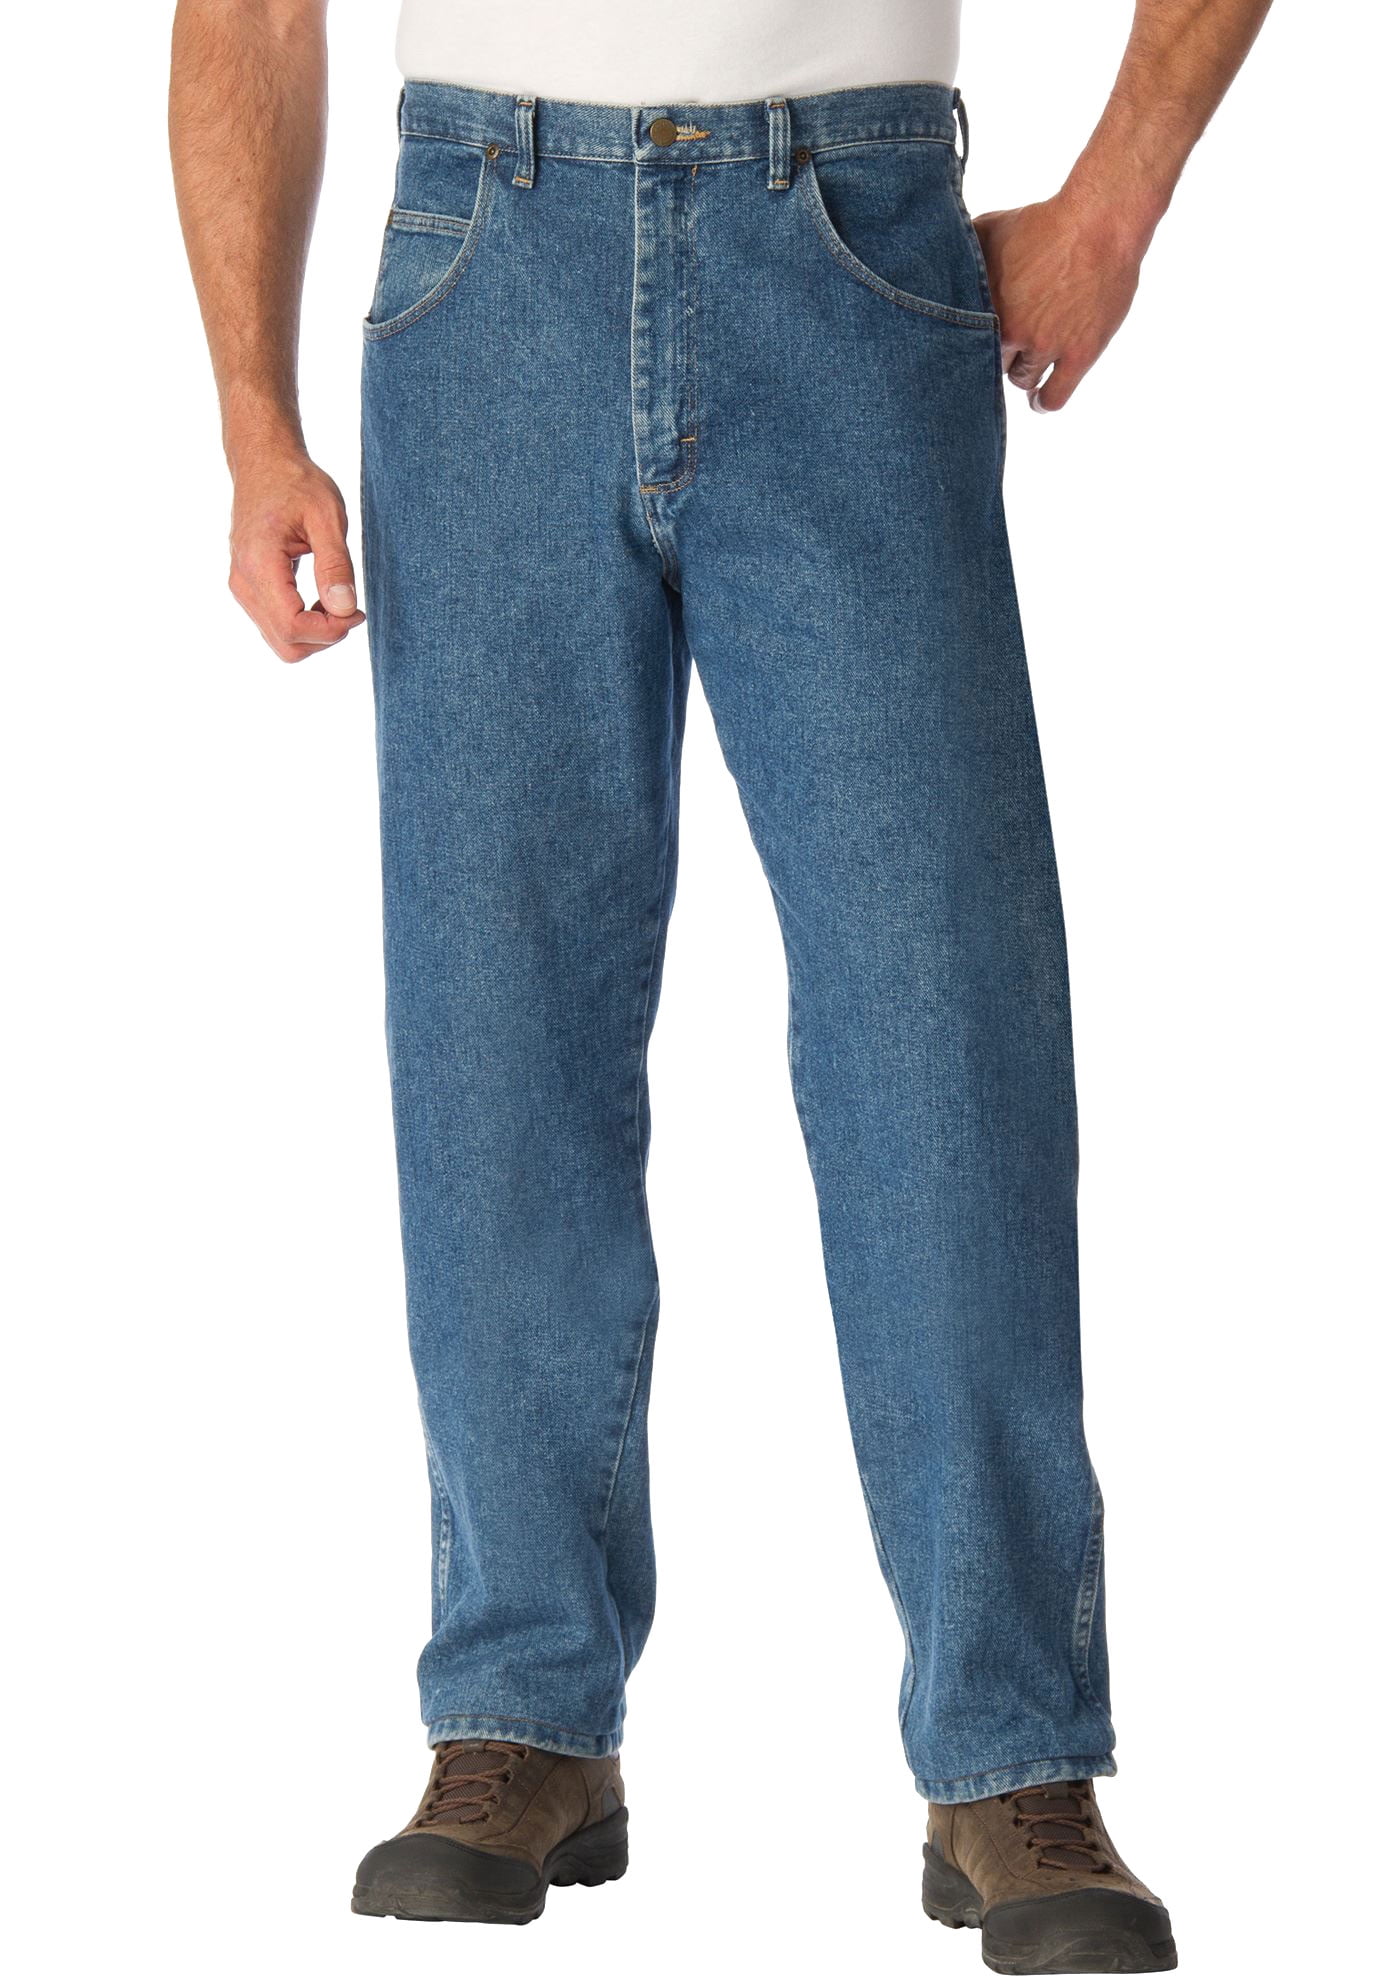 Wrangler - Wrangler Men's Big & Tall Relaxed Fit Classic Jeans ...